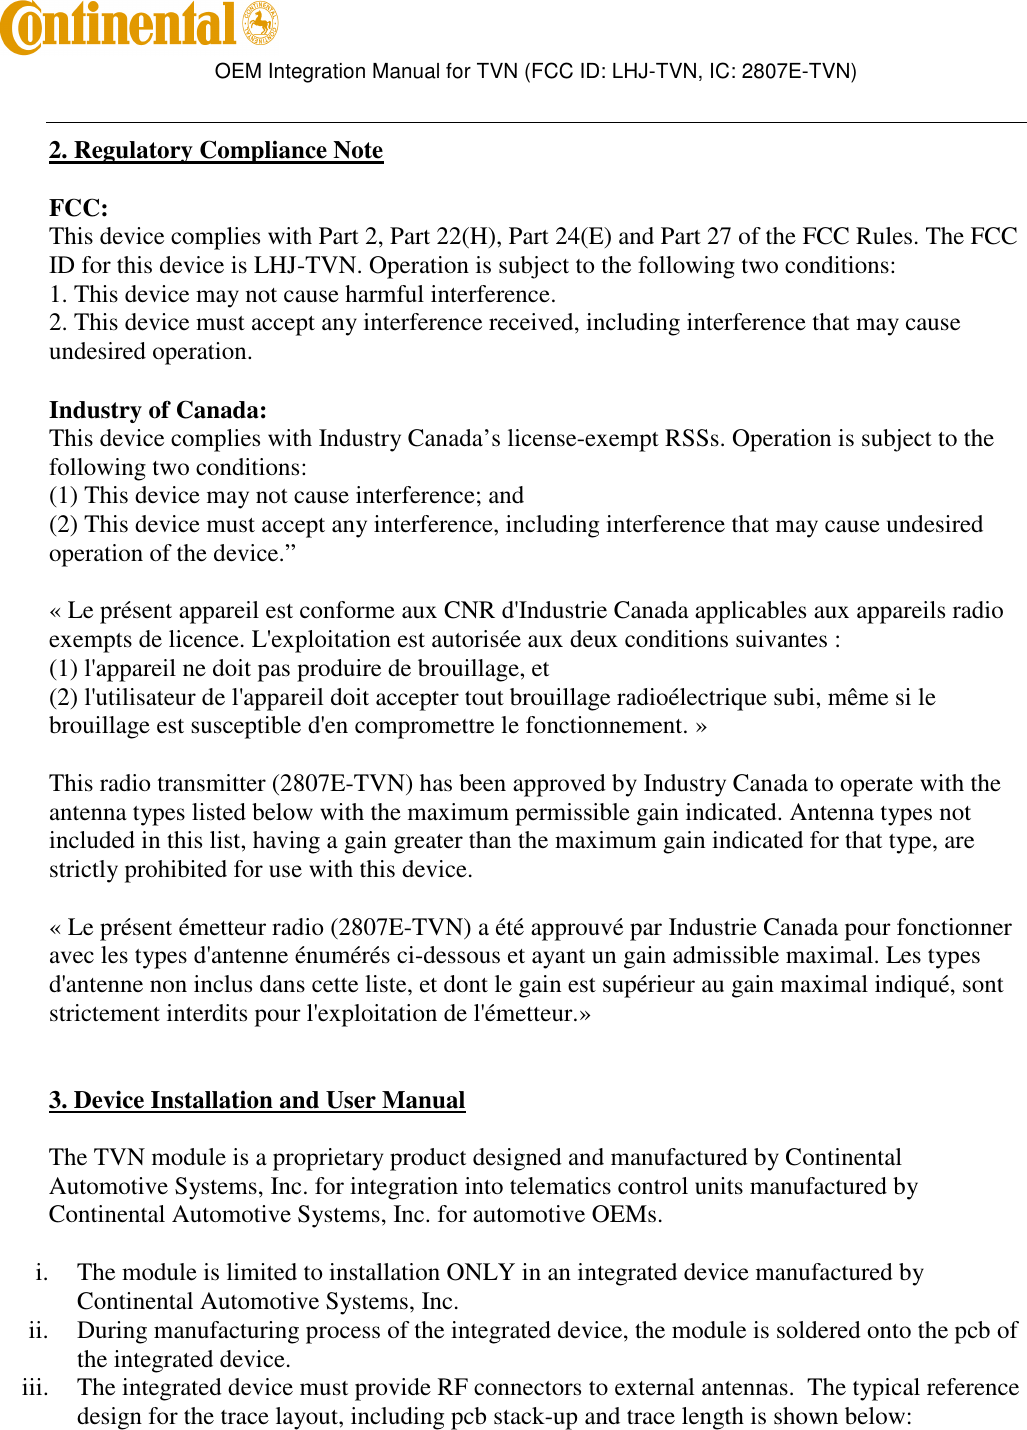        OEM Integration Manual for TVN (FCC ID: LHJ-TVN, IC: 2807E-TVN)   2. Regulatory Compliance Note FCC: This device complies with Part 2, Part 22(H), Part 24(E) and Part 27 of the FCC Rules. The FCC ID for this device is LHJ-TVN. Operation is subject to the following two conditions: 1. This device may not cause harmful interference. 2. This device must accept any interference received, including interference that may cause undesired operation. Industry of Canada: This device complies with Industry Canada’s license-exempt RSSs. Operation is subject to the following two conditions:  (1) This device may not cause interference; and  (2) This device must accept any interference, including interference that may cause undesired operation of the device.”     « Le présent appareil est conforme aux CNR d&apos;Industrie Canada applicables aux appareils radio exempts de licence. L&apos;exploitation est autorisée aux deux conditions suivantes :  (1) l&apos;appareil ne doit pas produire de brouillage, et  (2) l&apos;utilisateur de l&apos;appareil doit accepter tout brouillage radioélectrique subi, même si le brouillage est susceptible d&apos;en compromettre le fonctionnement. »  This radio transmitter (2807E-TVN) has been approved by Industry Canada to operate with the antenna types listed below with the maximum permissible gain indicated. Antenna types not included in this list, having a gain greater than the maximum gain indicated for that type, are strictly prohibited for use with this device.     « Le présent émetteur radio (2807E-TVN) a été approuvé par Industrie Canada pour fonctionner avec les types d&apos;antenne énumérés ci-dessous et ayant un gain admissible maximal. Les types d&apos;antenne non inclus dans cette liste, et dont le gain est supérieur au gain maximal indiqué, sont strictement interdits pour l&apos;exploitation de l&apos;émetteur.»   3. Device Installation and User Manual The TVN module is a proprietary product designed and manufactured by Continental Automotive Systems, Inc. for integration into telematics control units manufactured by Continental Automotive Systems, Inc. for automotive OEMs.   i. The module is limited to installation ONLY in an integrated device manufactured by Continental Automotive Systems, Inc. ii. During manufacturing process of the integrated device, the module is soldered onto the pcb of the integrated device. iii. The integrated device must provide RF connectors to external antennas.  The typical reference design for the trace layout, including pcb stack-up and trace length is shown below: 